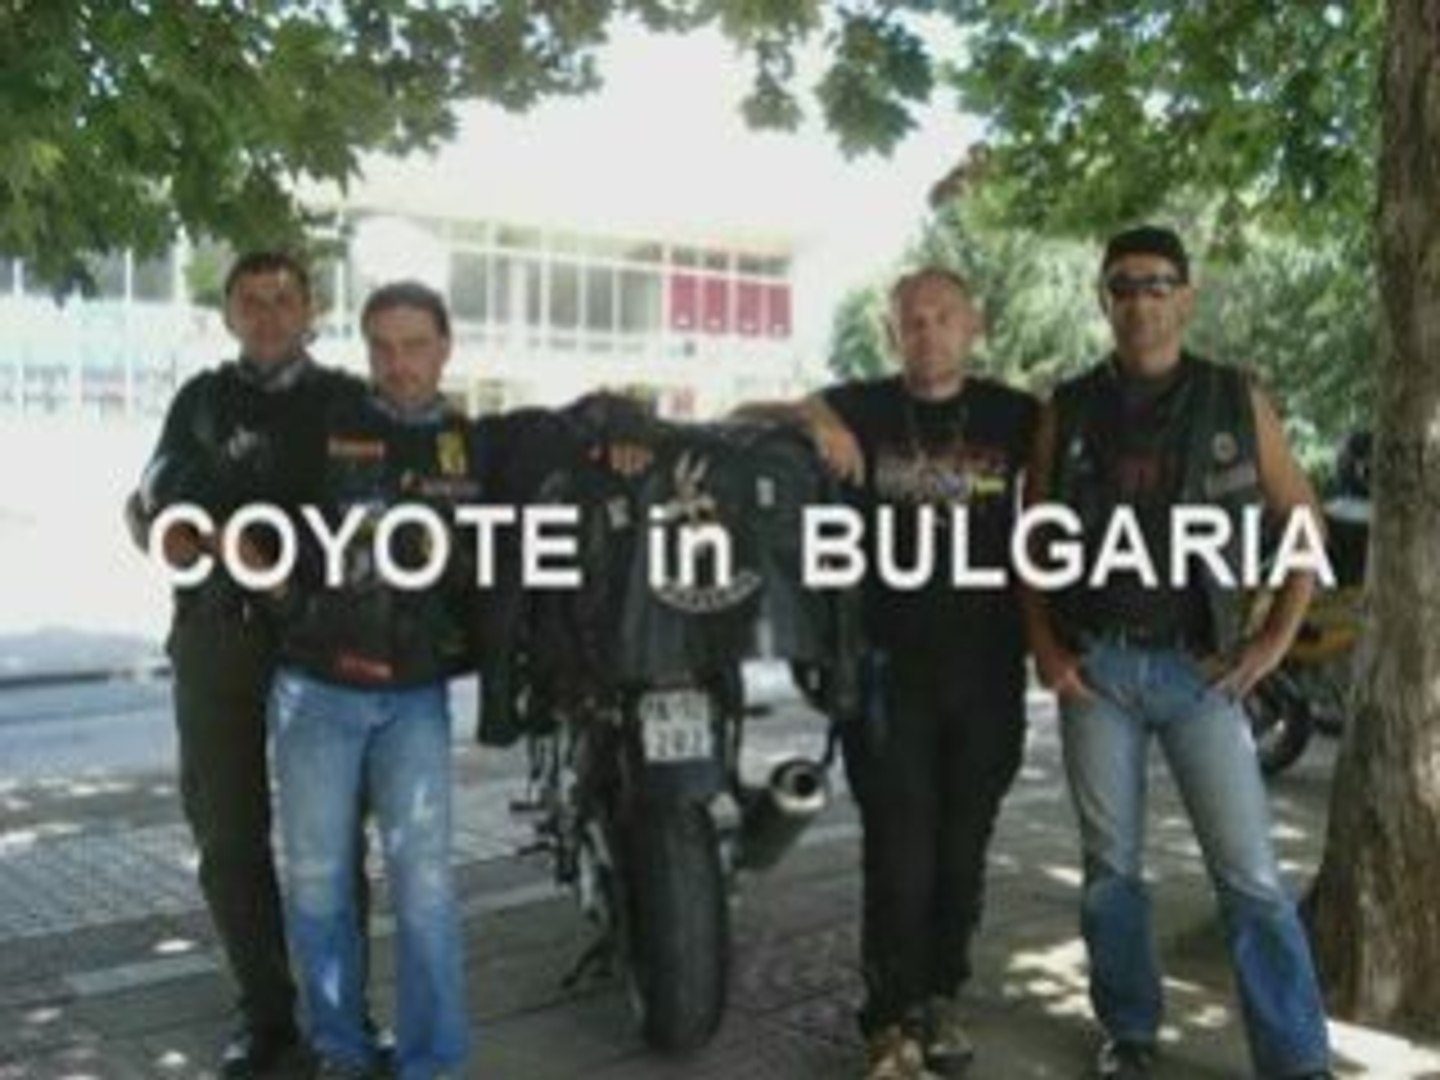 Coyote in bulgaria 2008